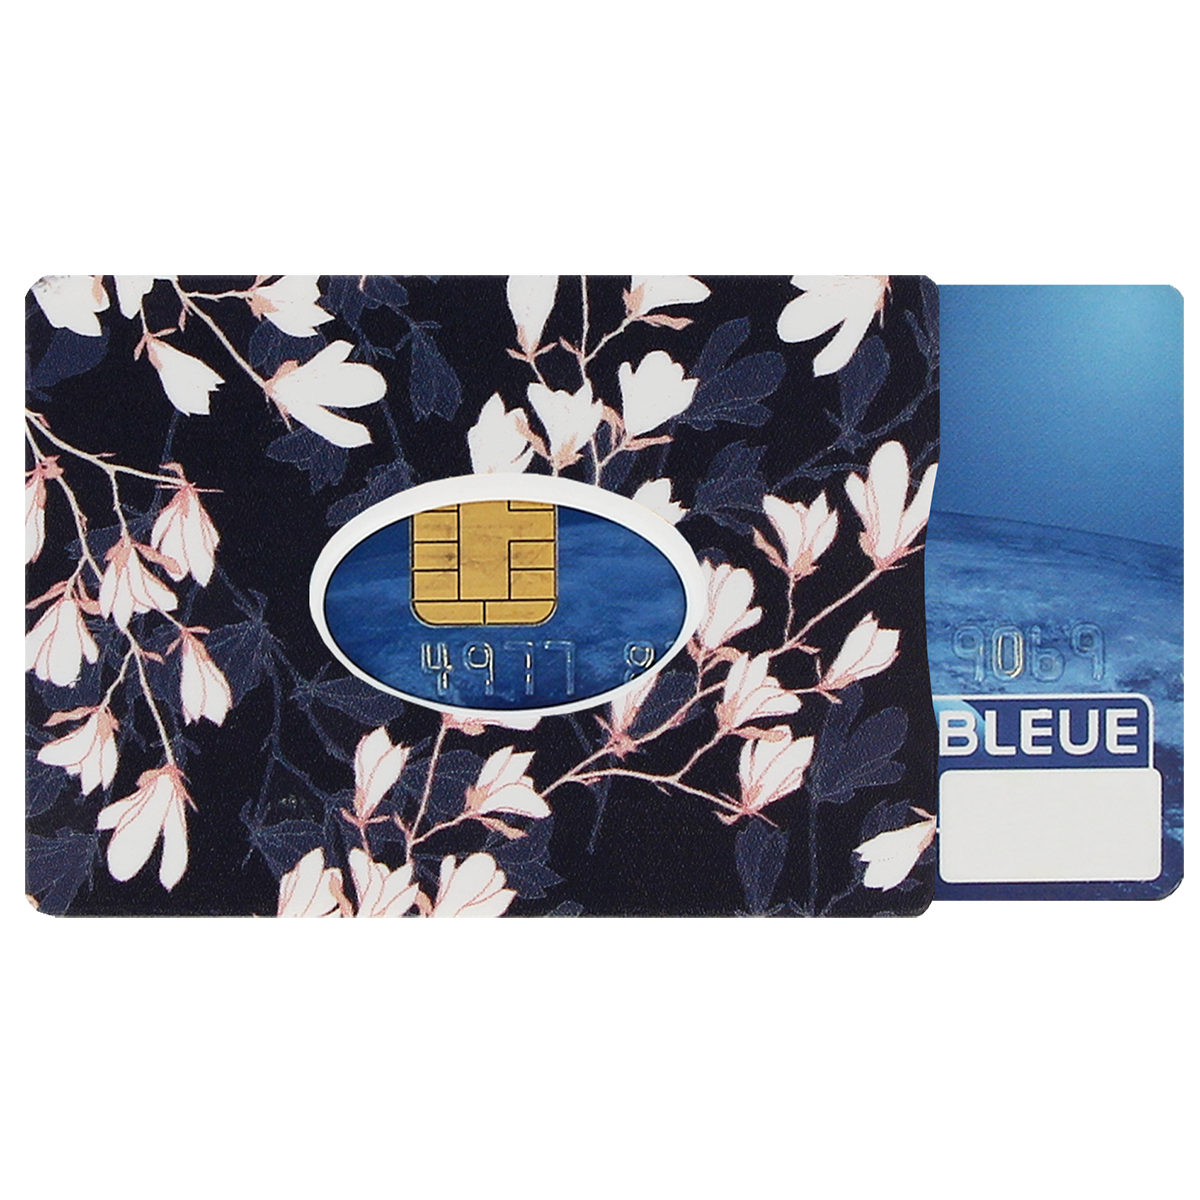 Etui rigide carte bancaire bleu transparent made in France porte CB protège